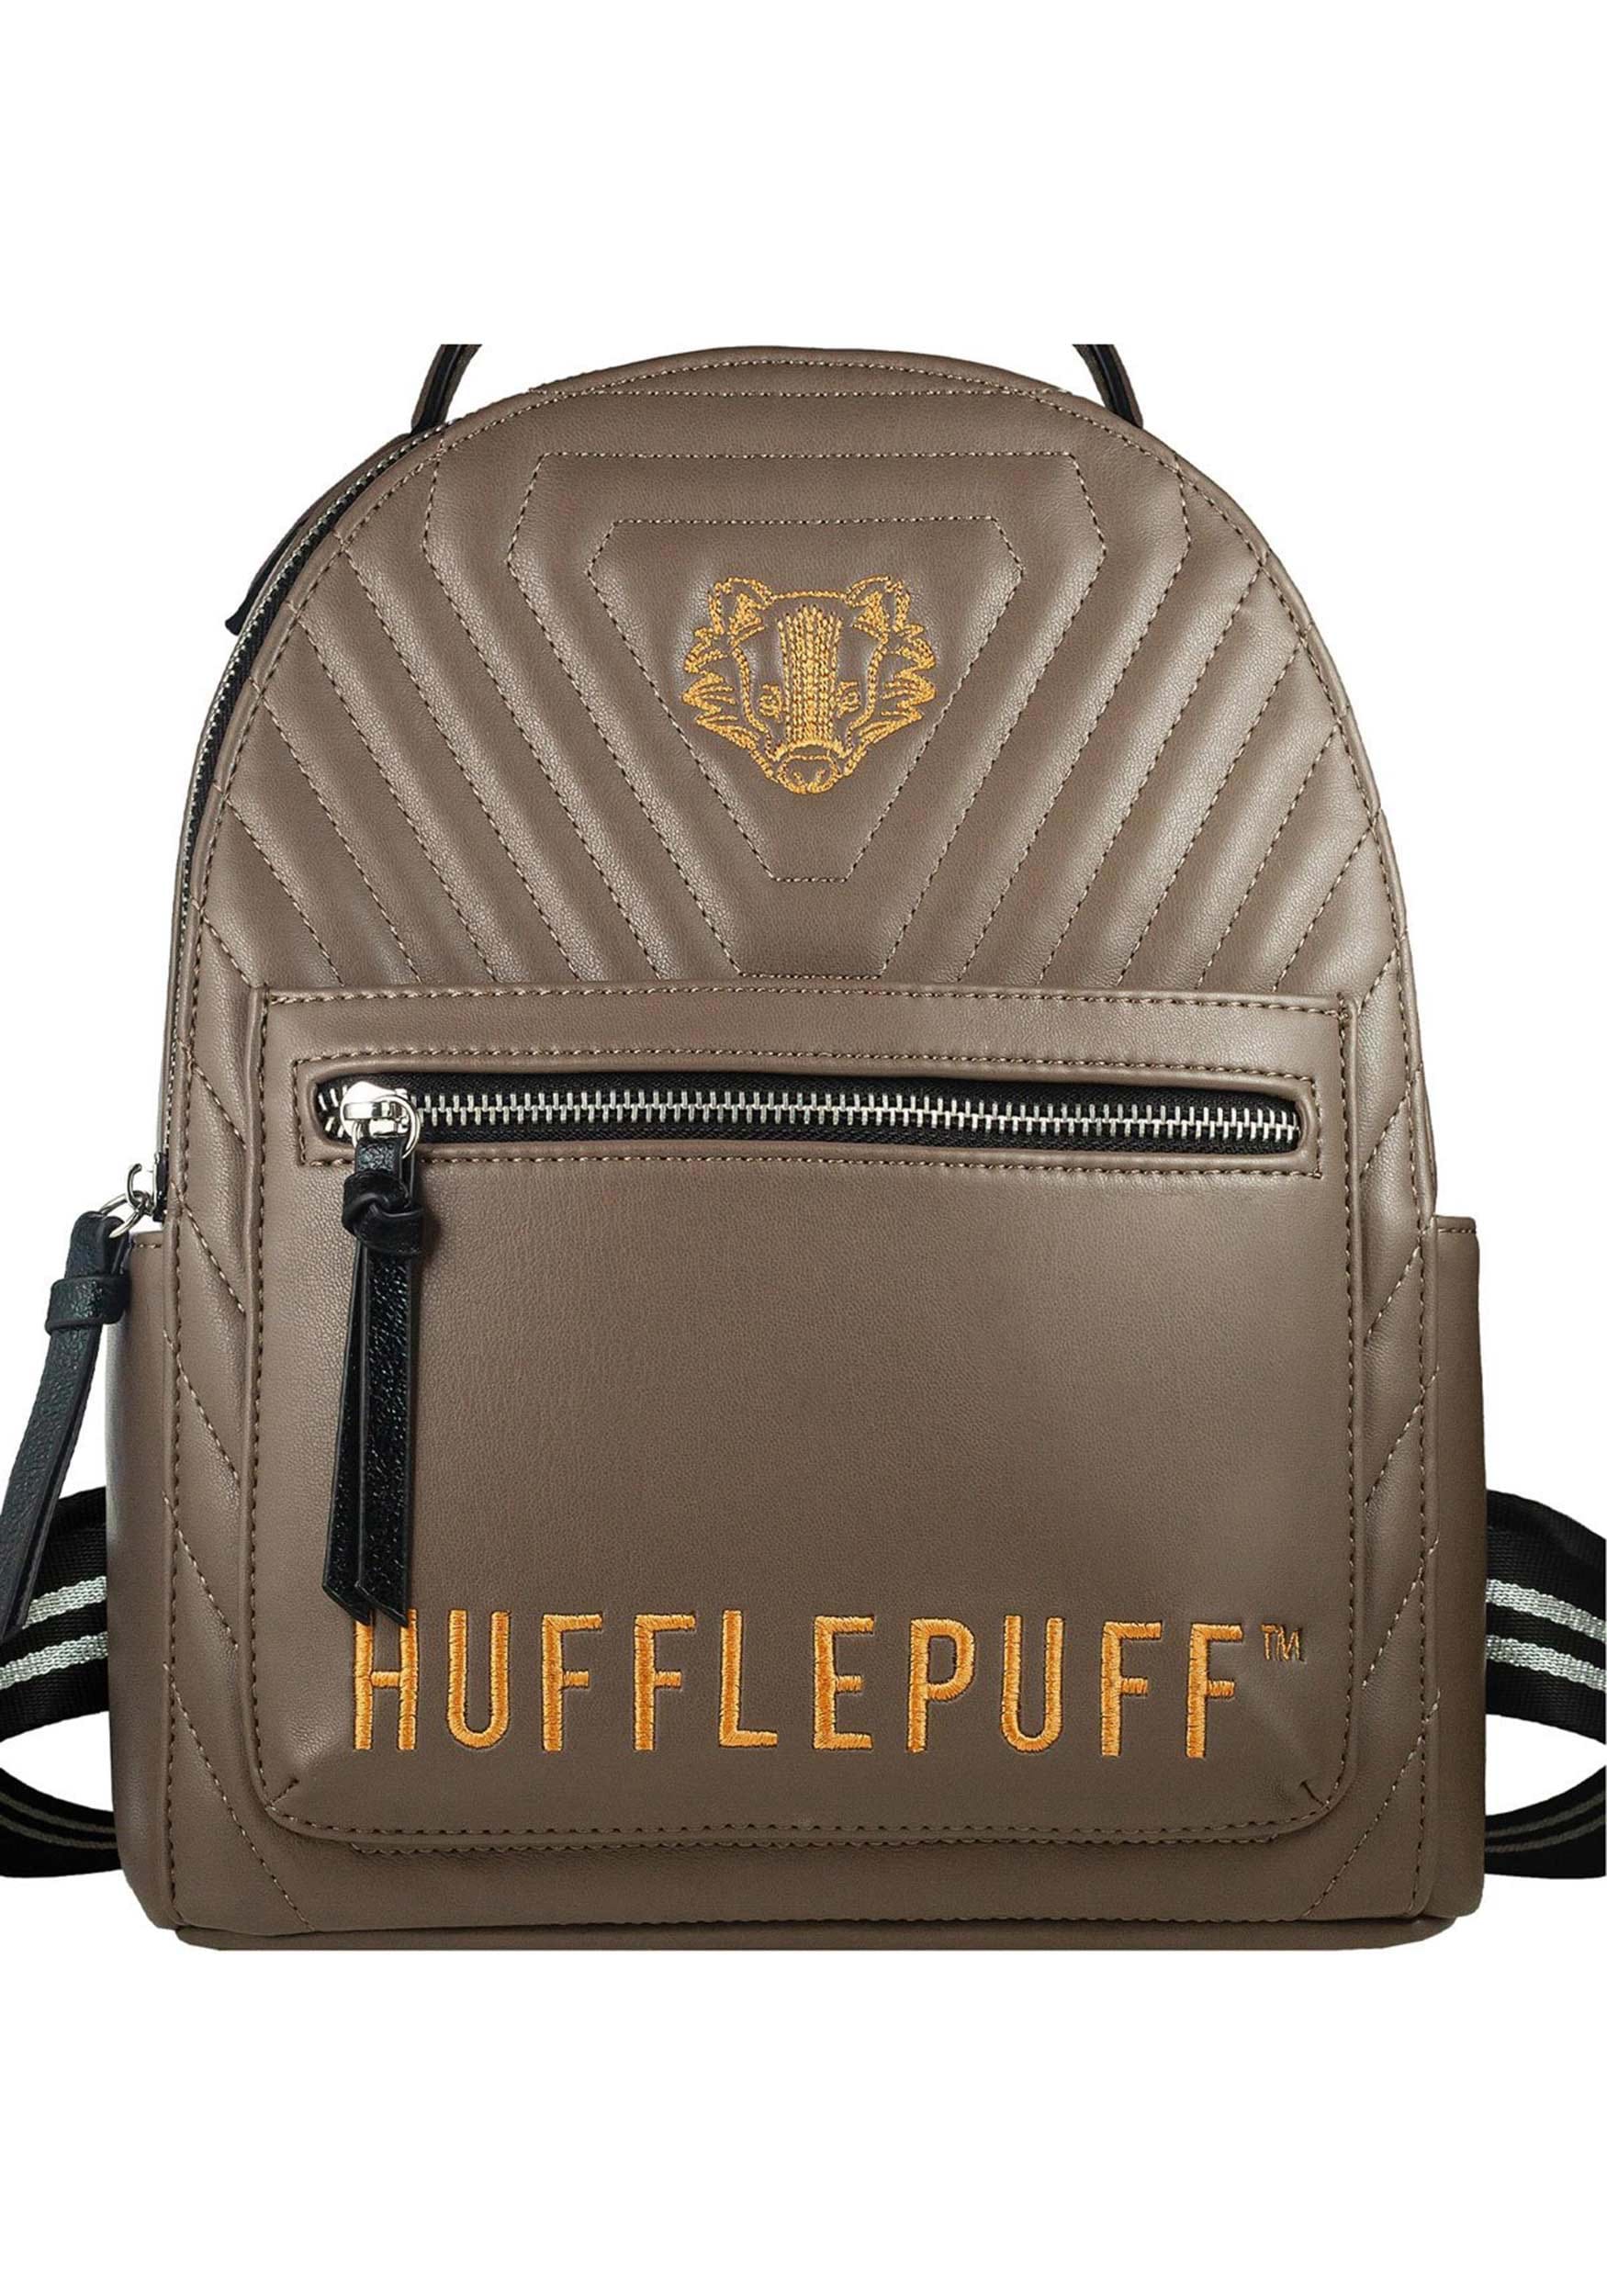 Hufflepuff House Harry Potter Sport Backpack